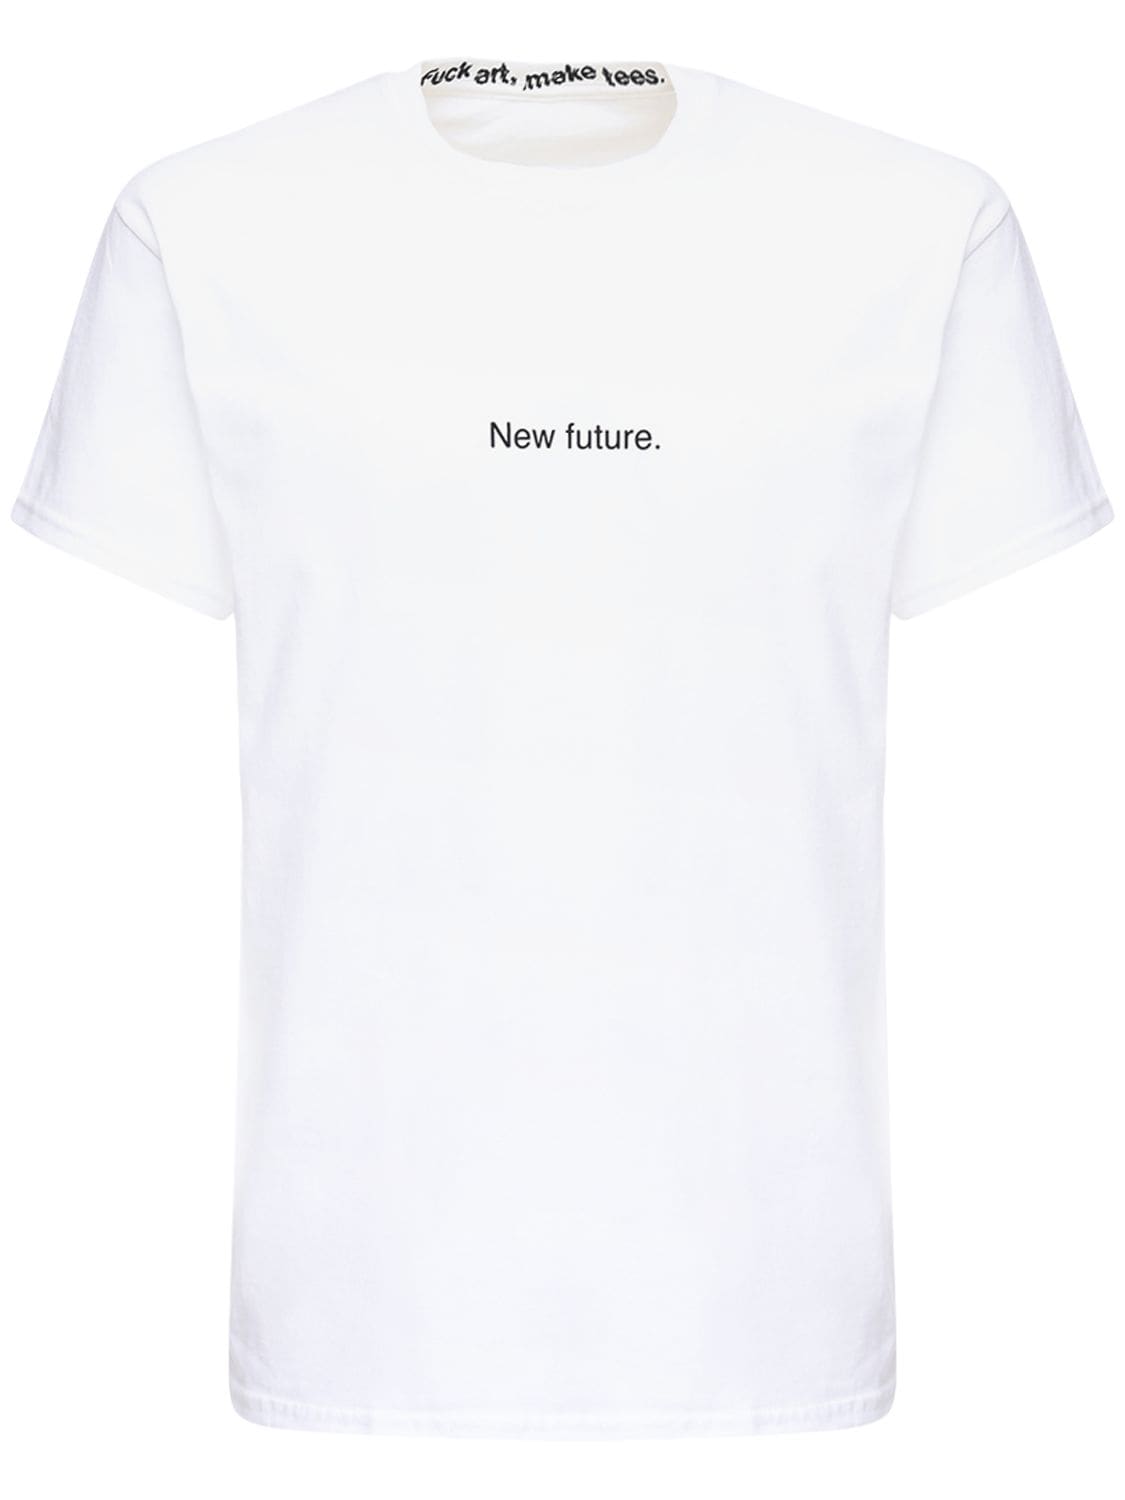 FAMT - FUCK ART MAKE TEES New Future Cotton T-shirt